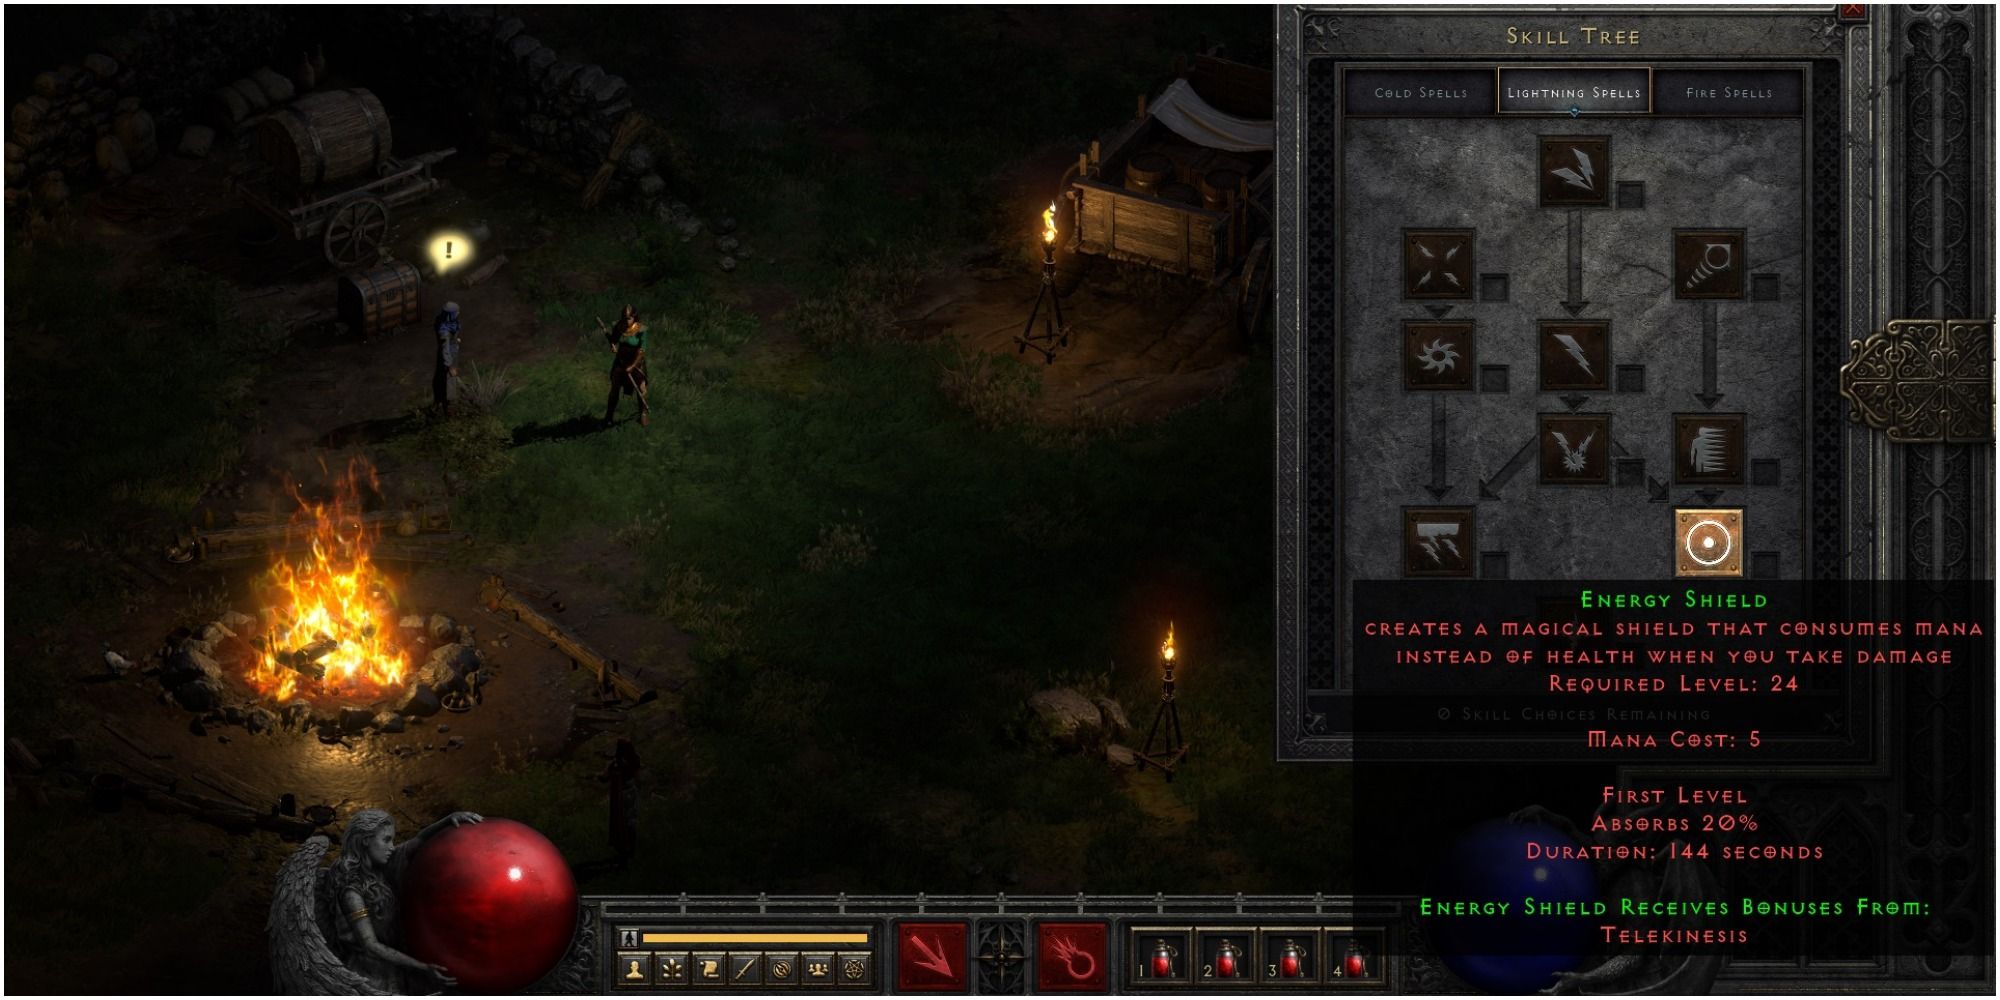 Diablo 2 Resurrected Energy Shield Description At Level One